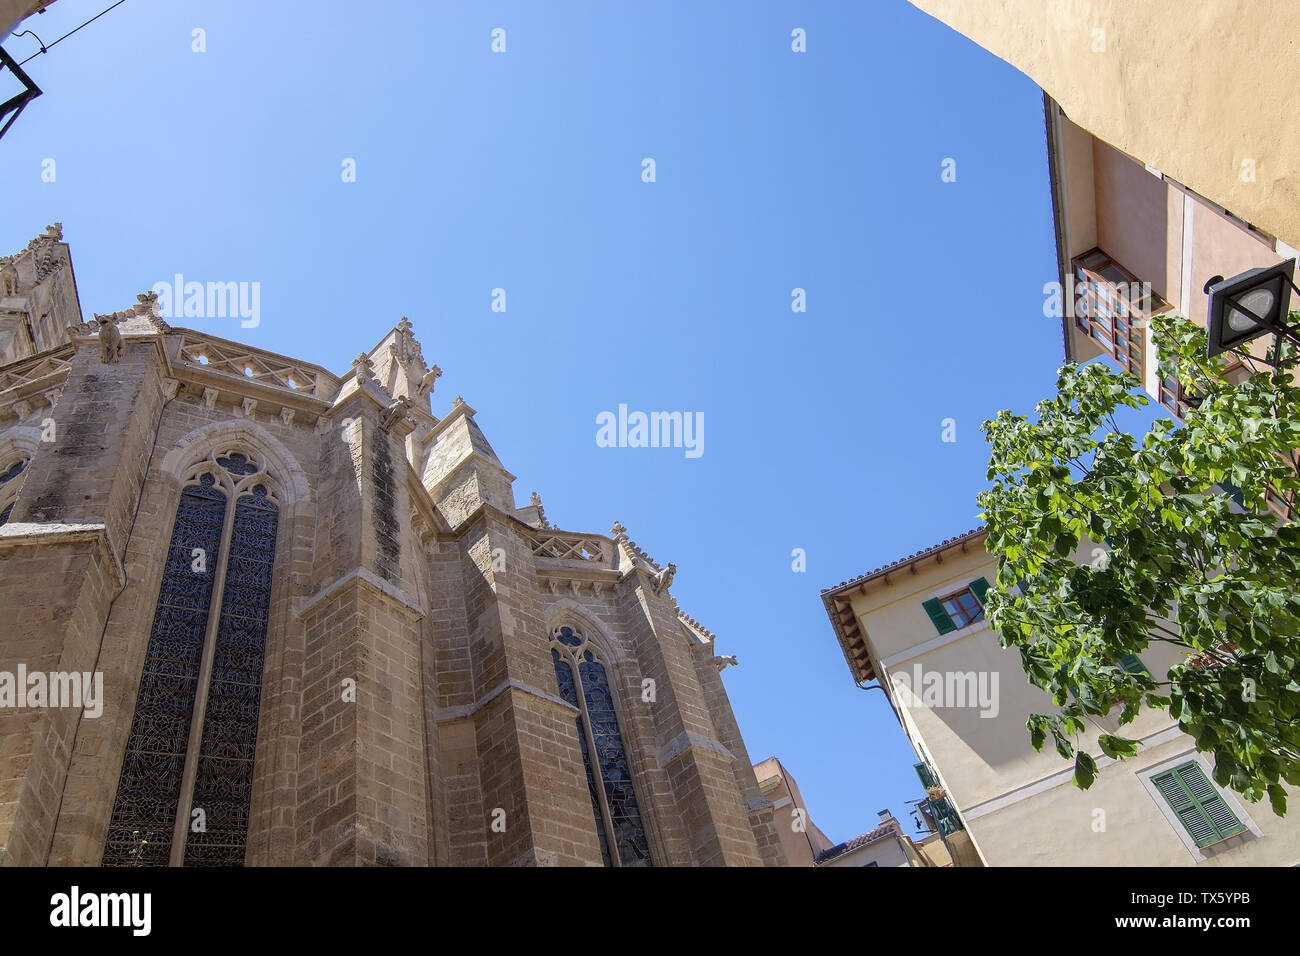 PALMA, MALLORCA, SPAIN - MAY 20, 2019: Basilica Sant Francesc detail against sky on May 20, 2019 in Palma, Mallorca, Spain. Stock Photo